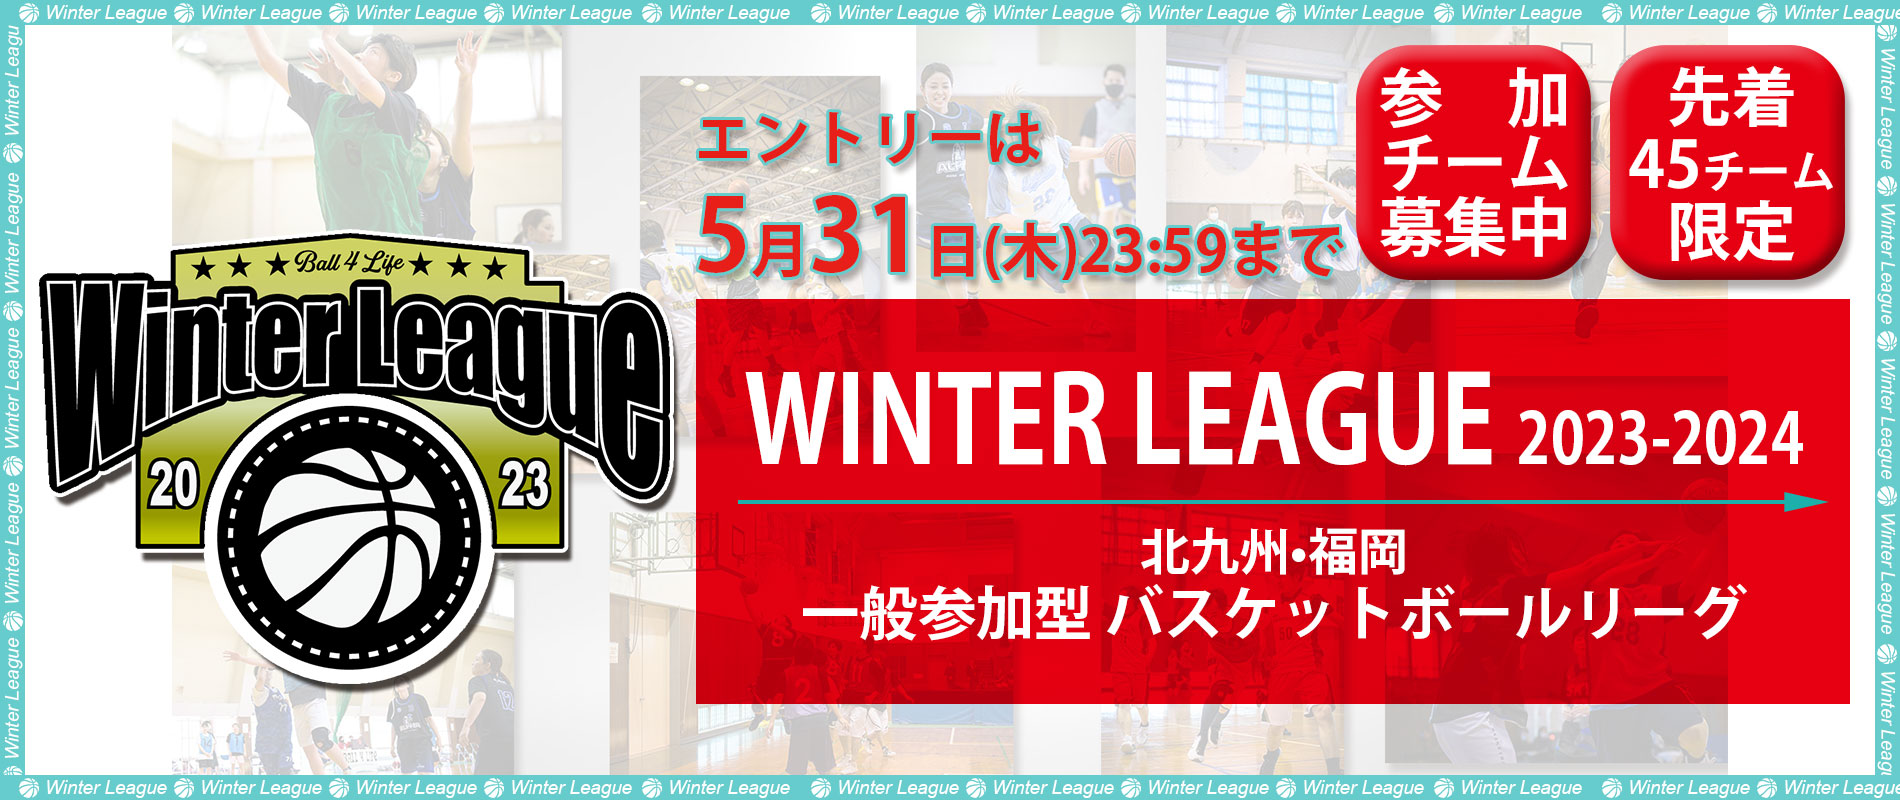 winter league